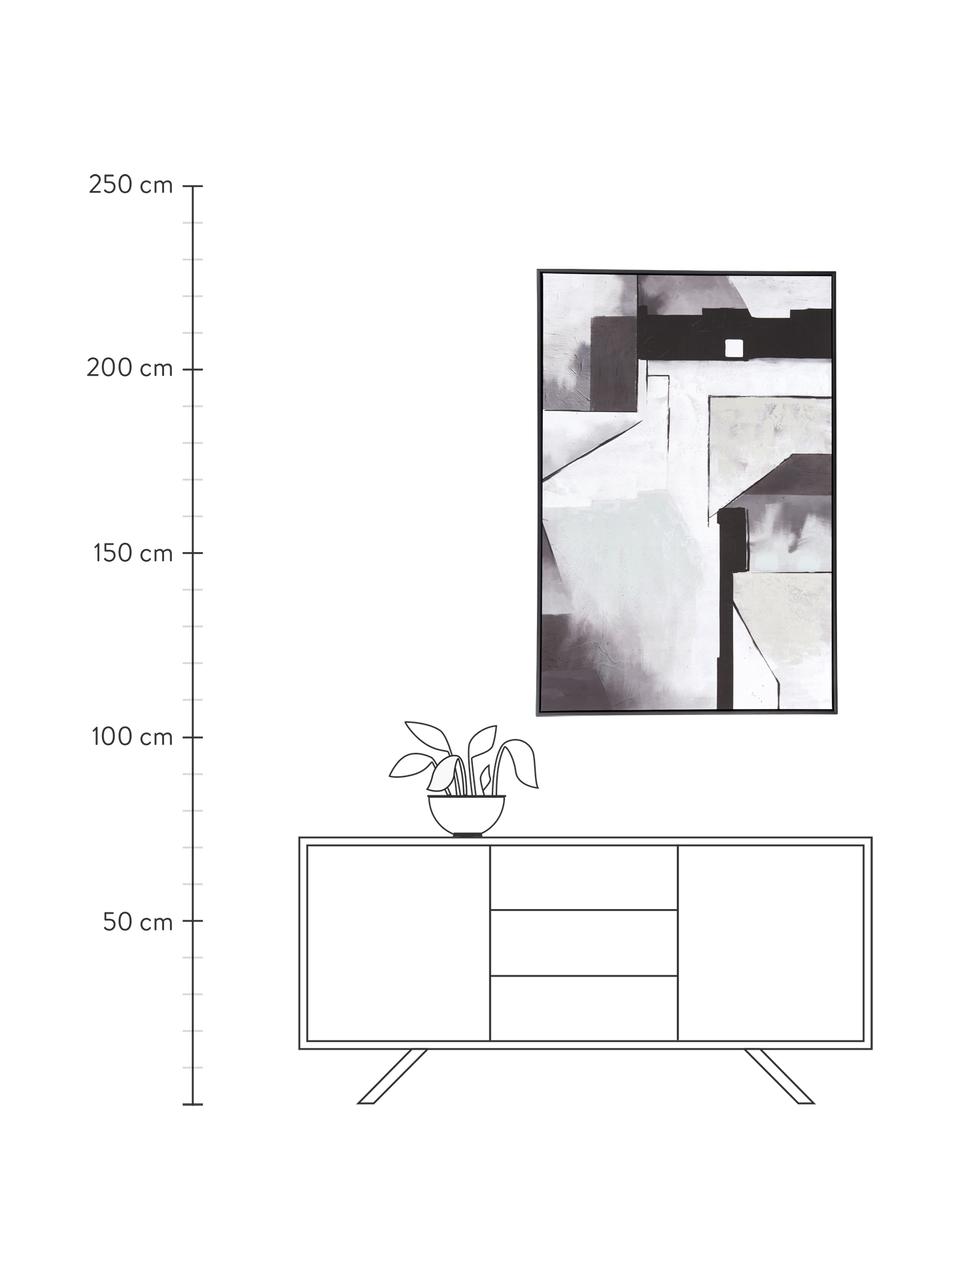 Leinwanddruck Shapes, Rahmen: Eukalyptusholz, Mitteldic, Bild: Leinwand, Schwarz, Braun, Beige, B 82 x H 122 cm